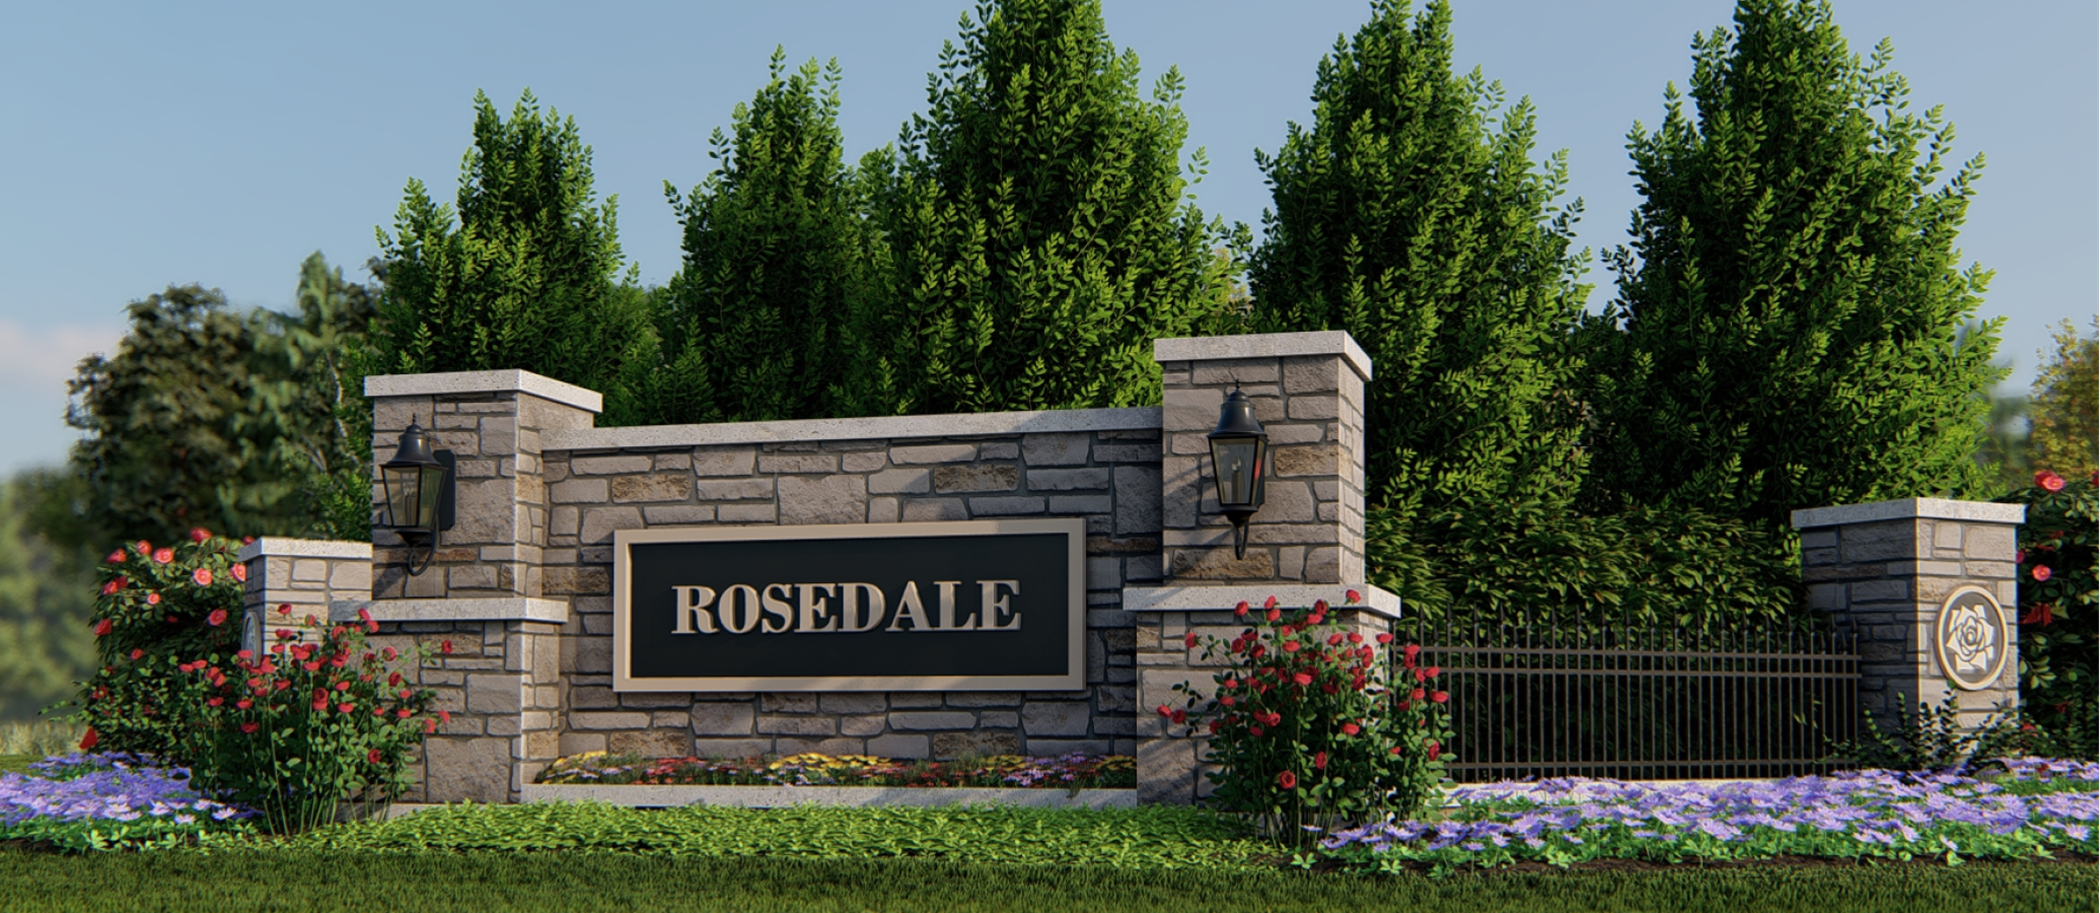 Rosedale community entrance monument